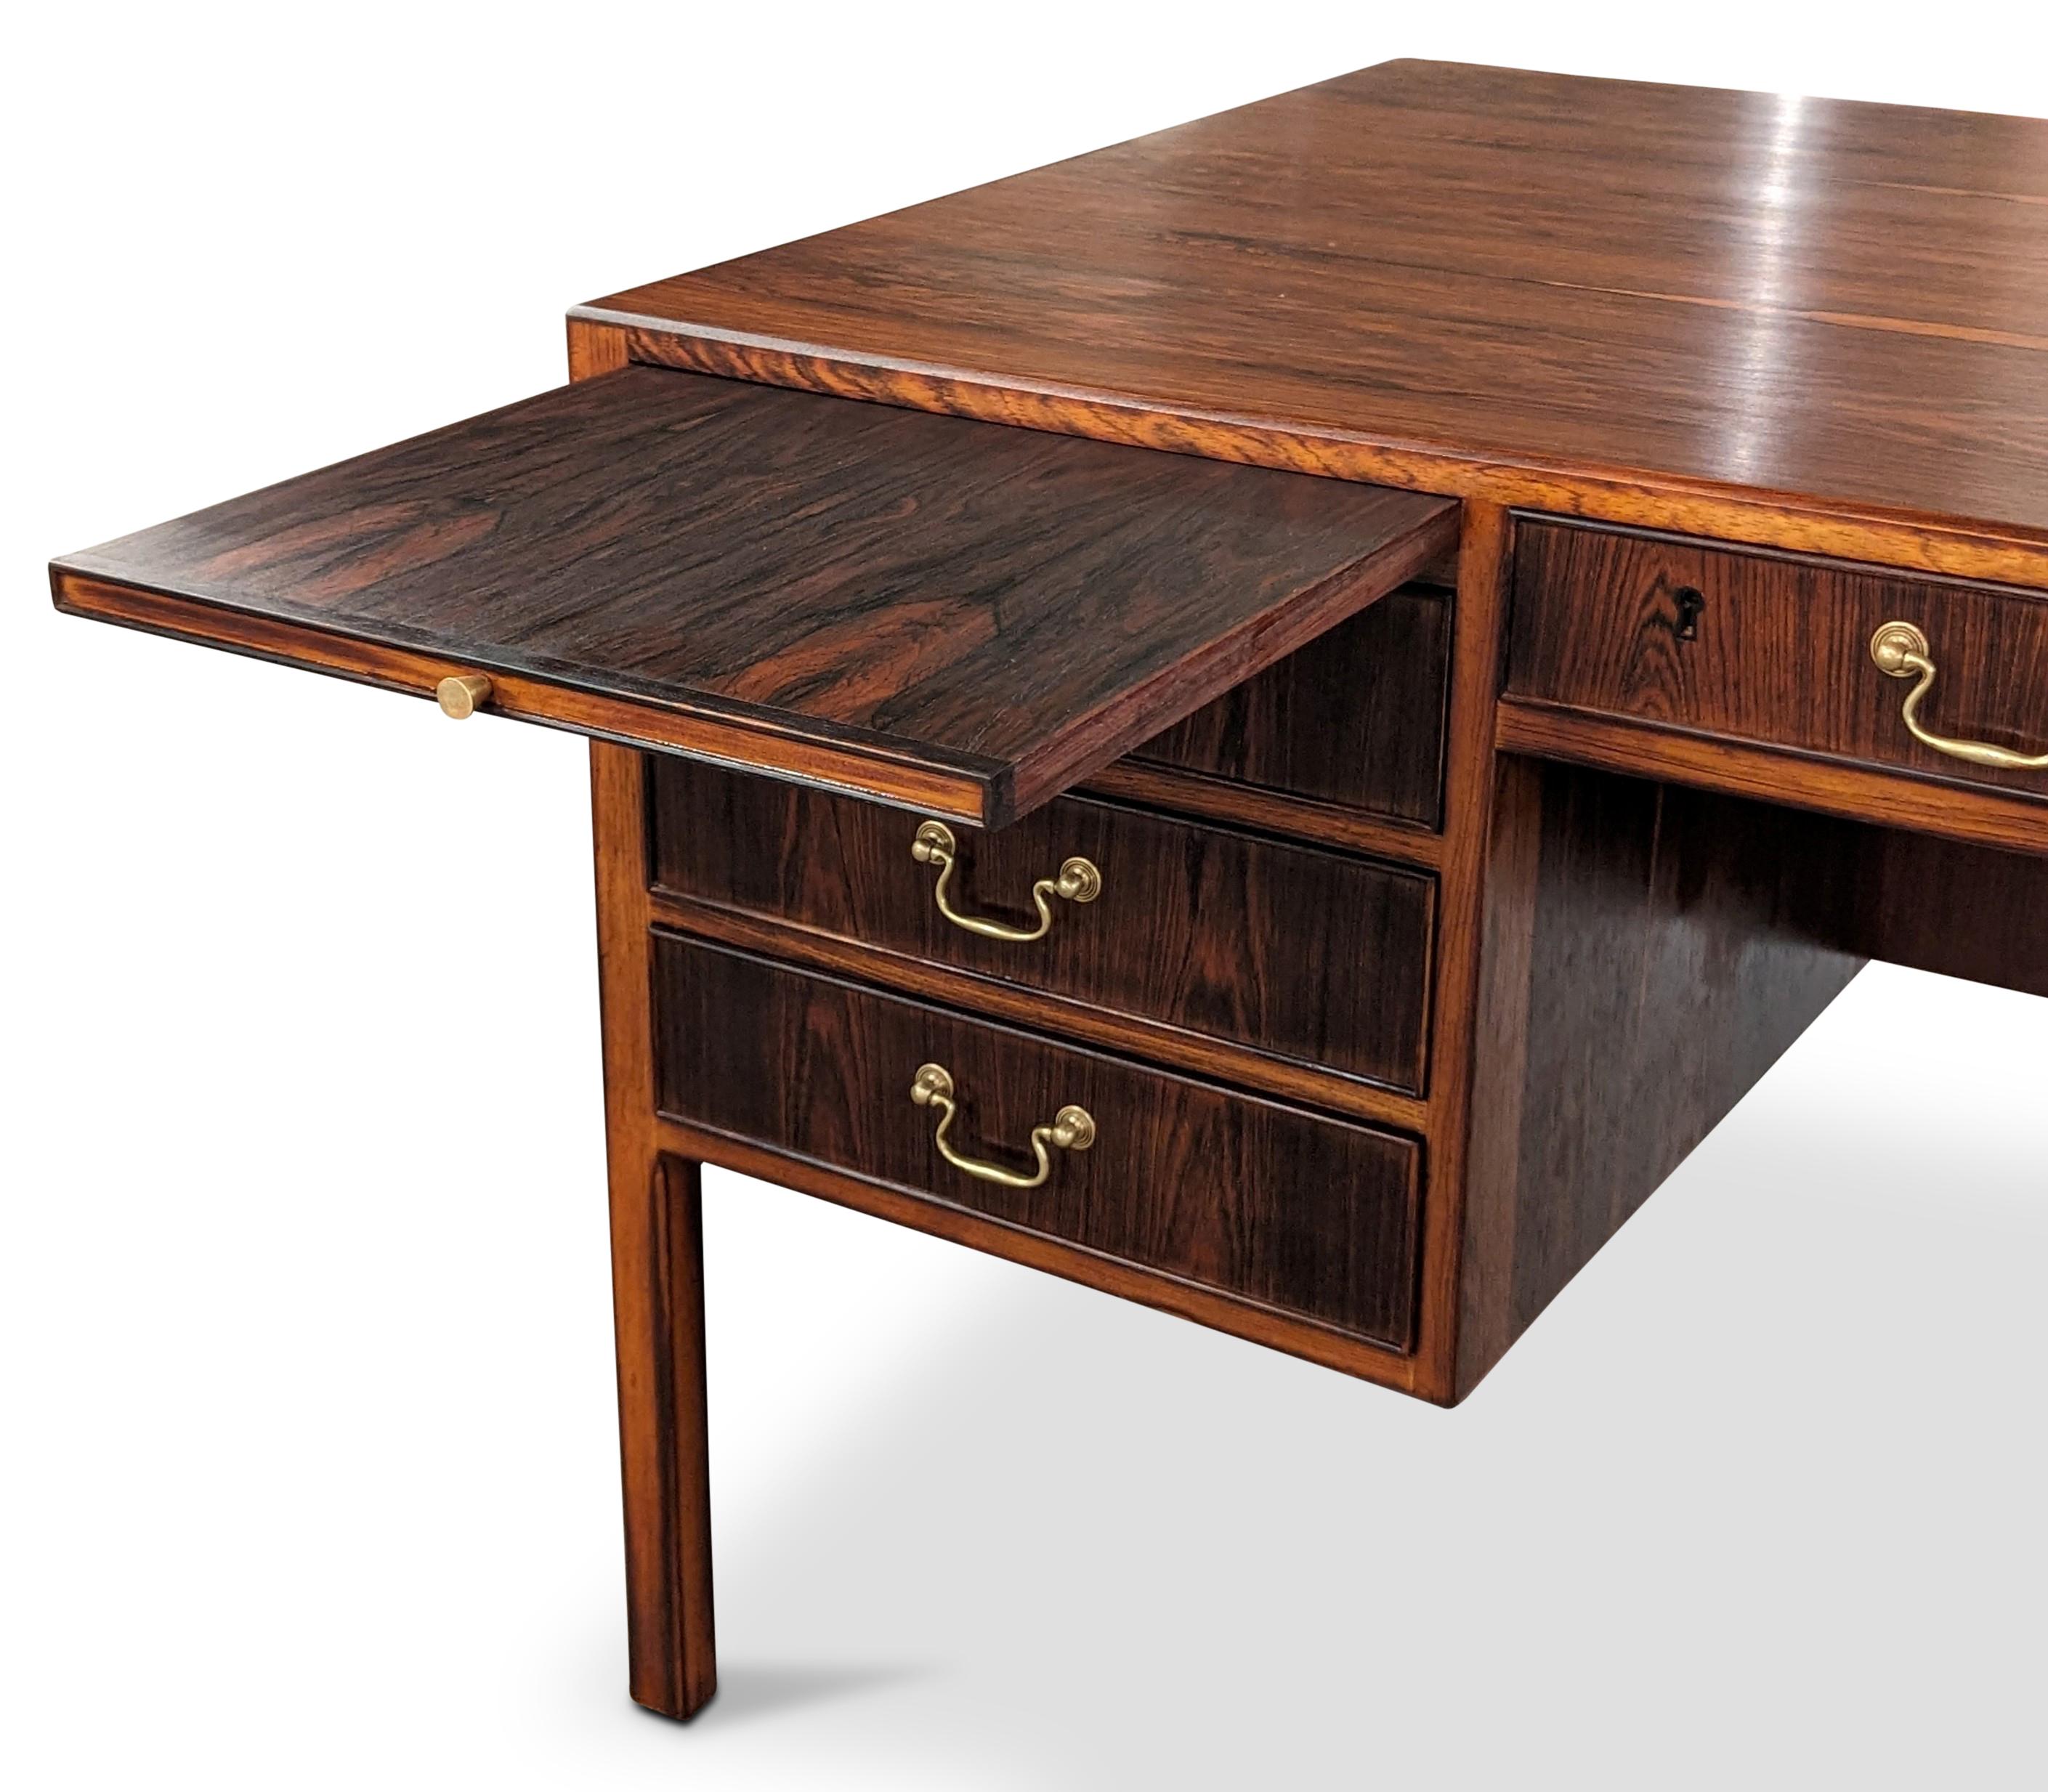 Ole Wancher Rosewood Desk - 0823177 Vintage Danish Mid Century For Sale 3